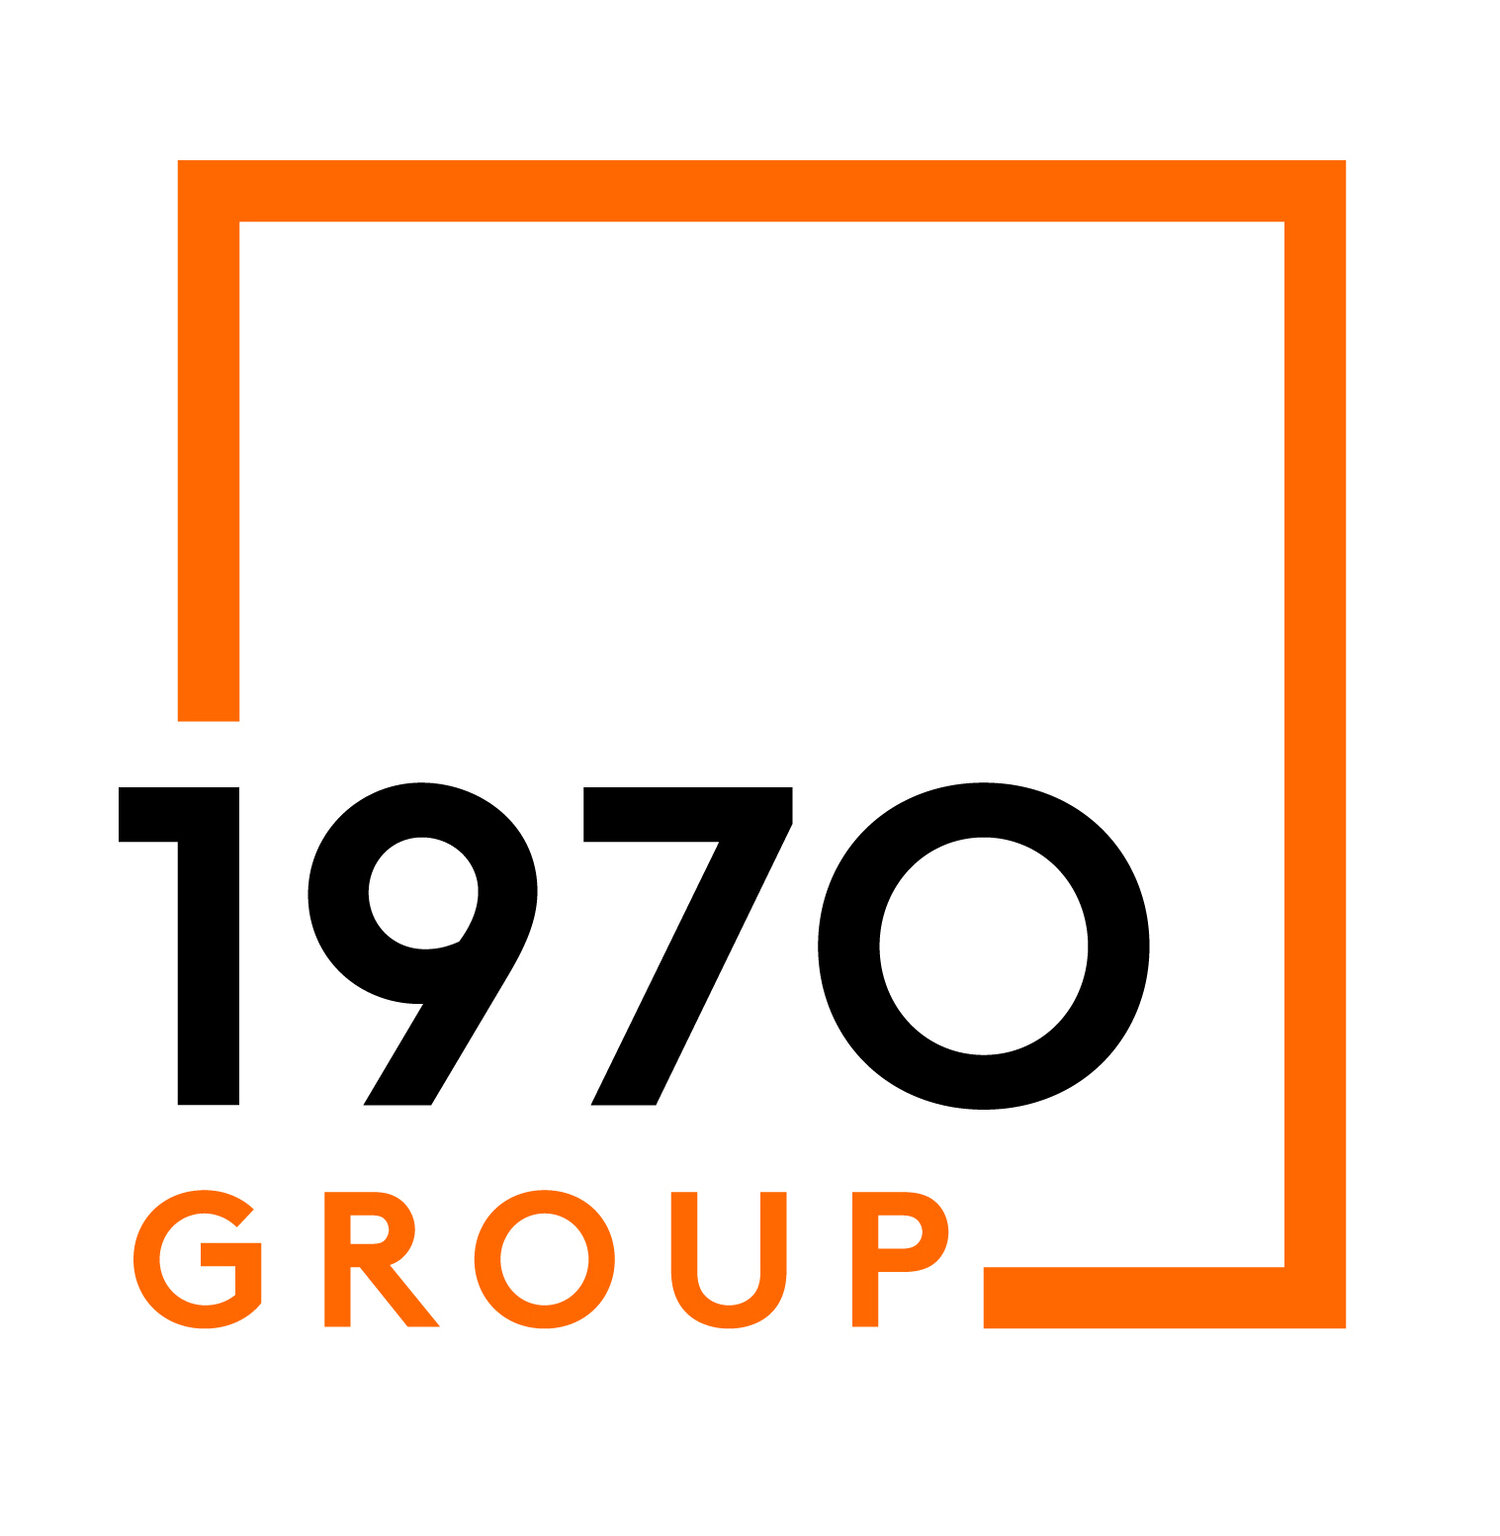 1970 Group